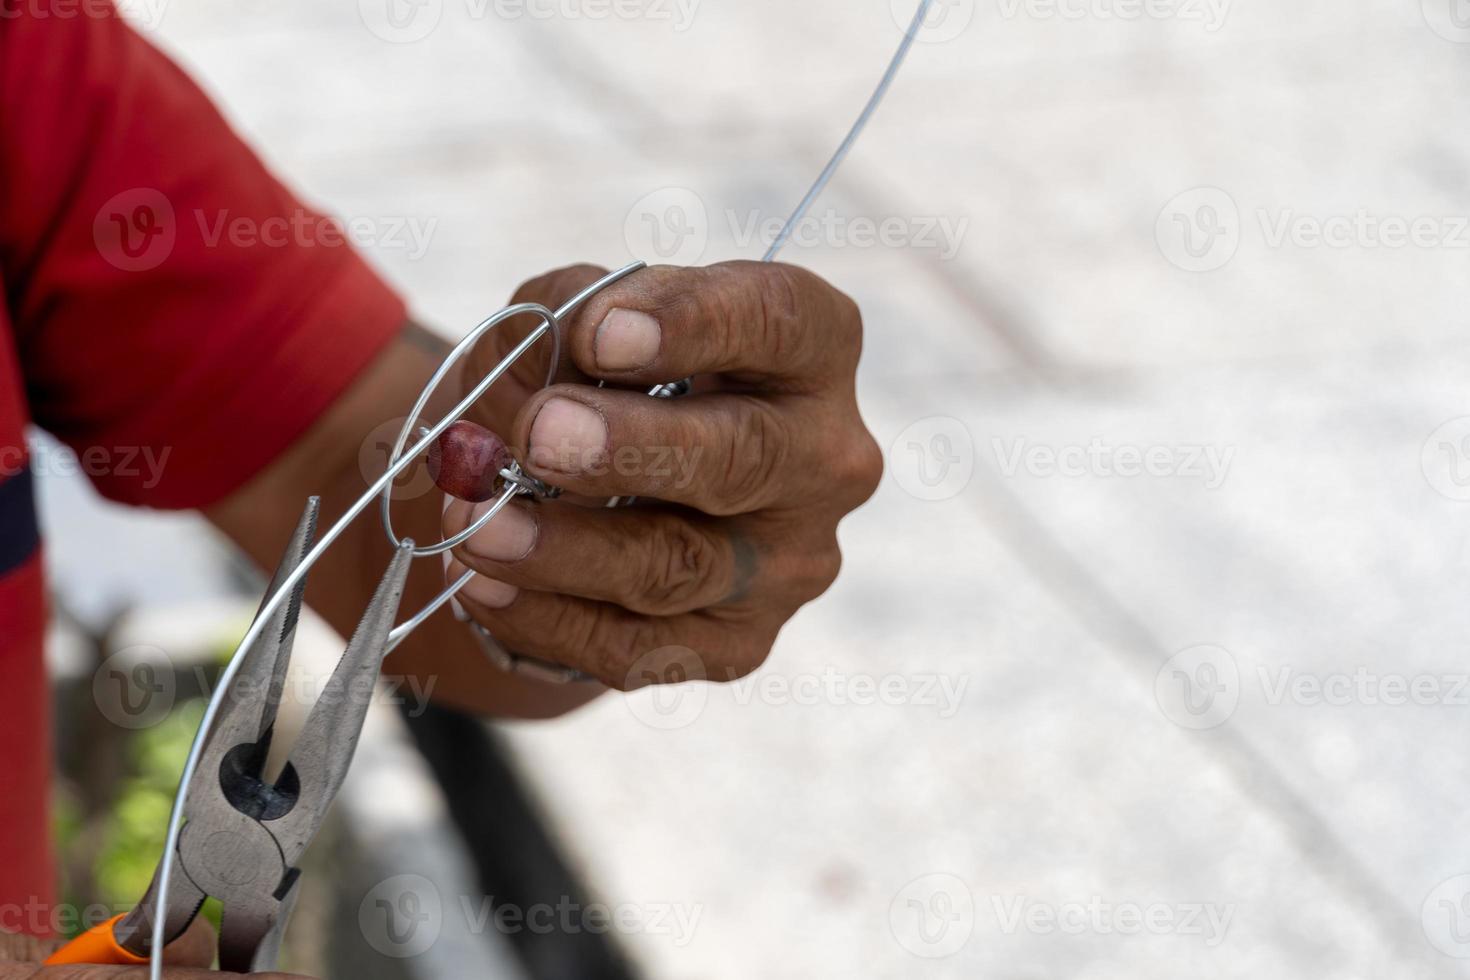 older man craftsman making metal figurines in the street, mexico latin america photo